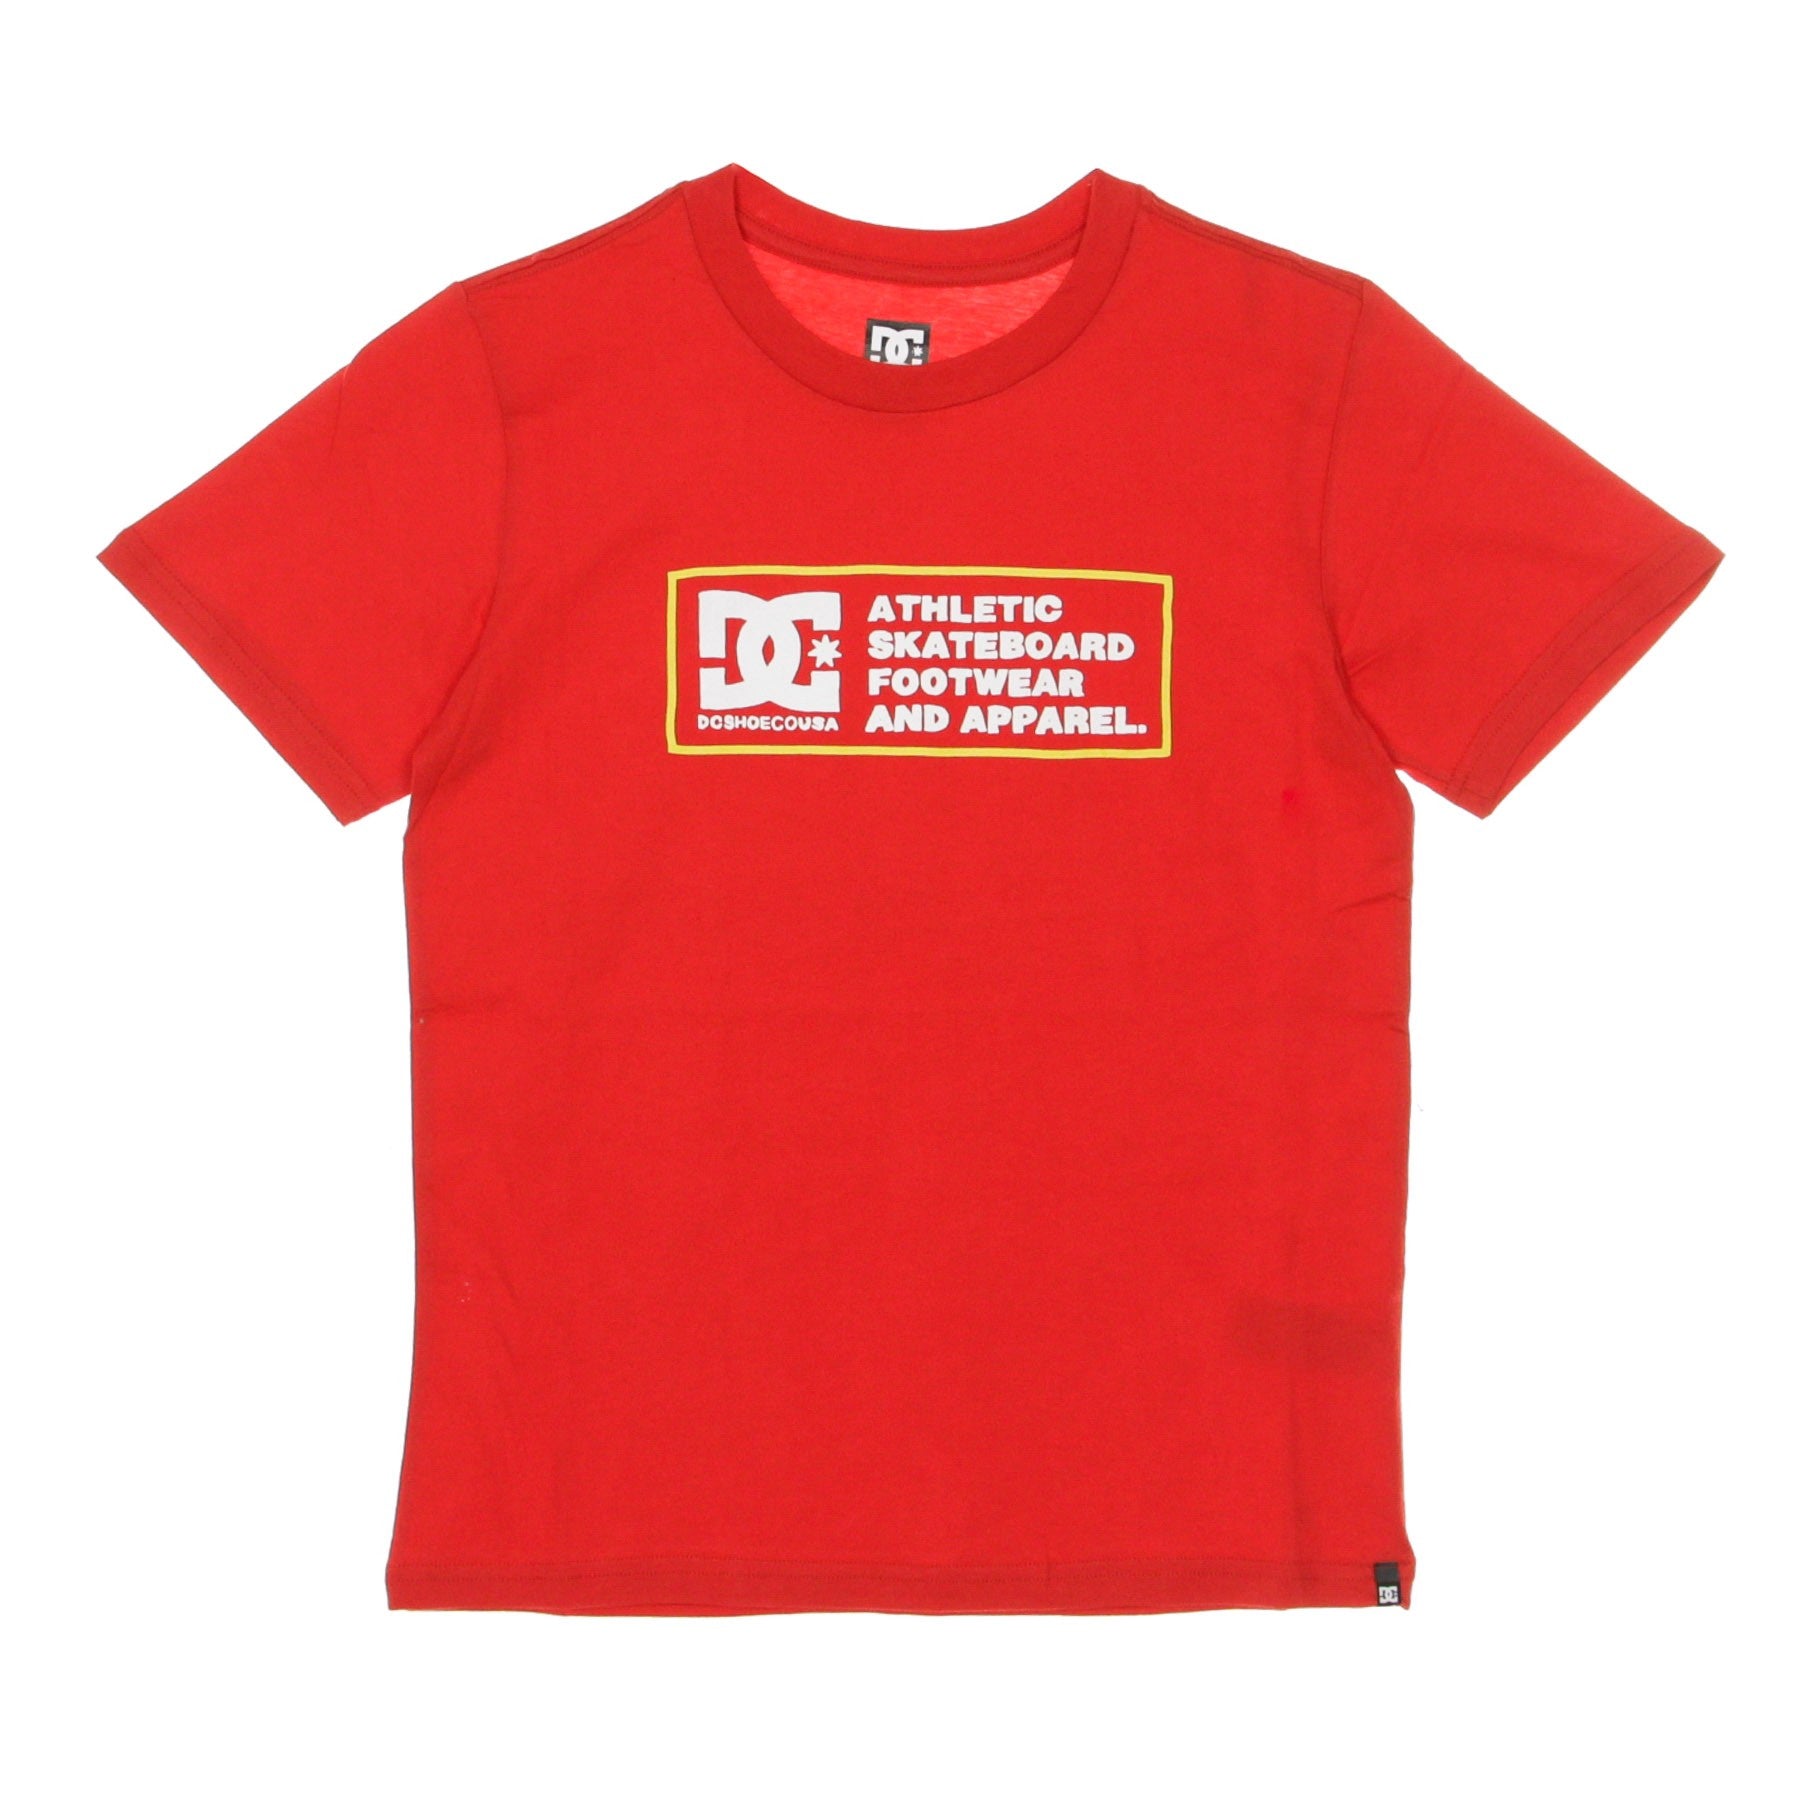 Sketchy Zone Children's T-Shirt